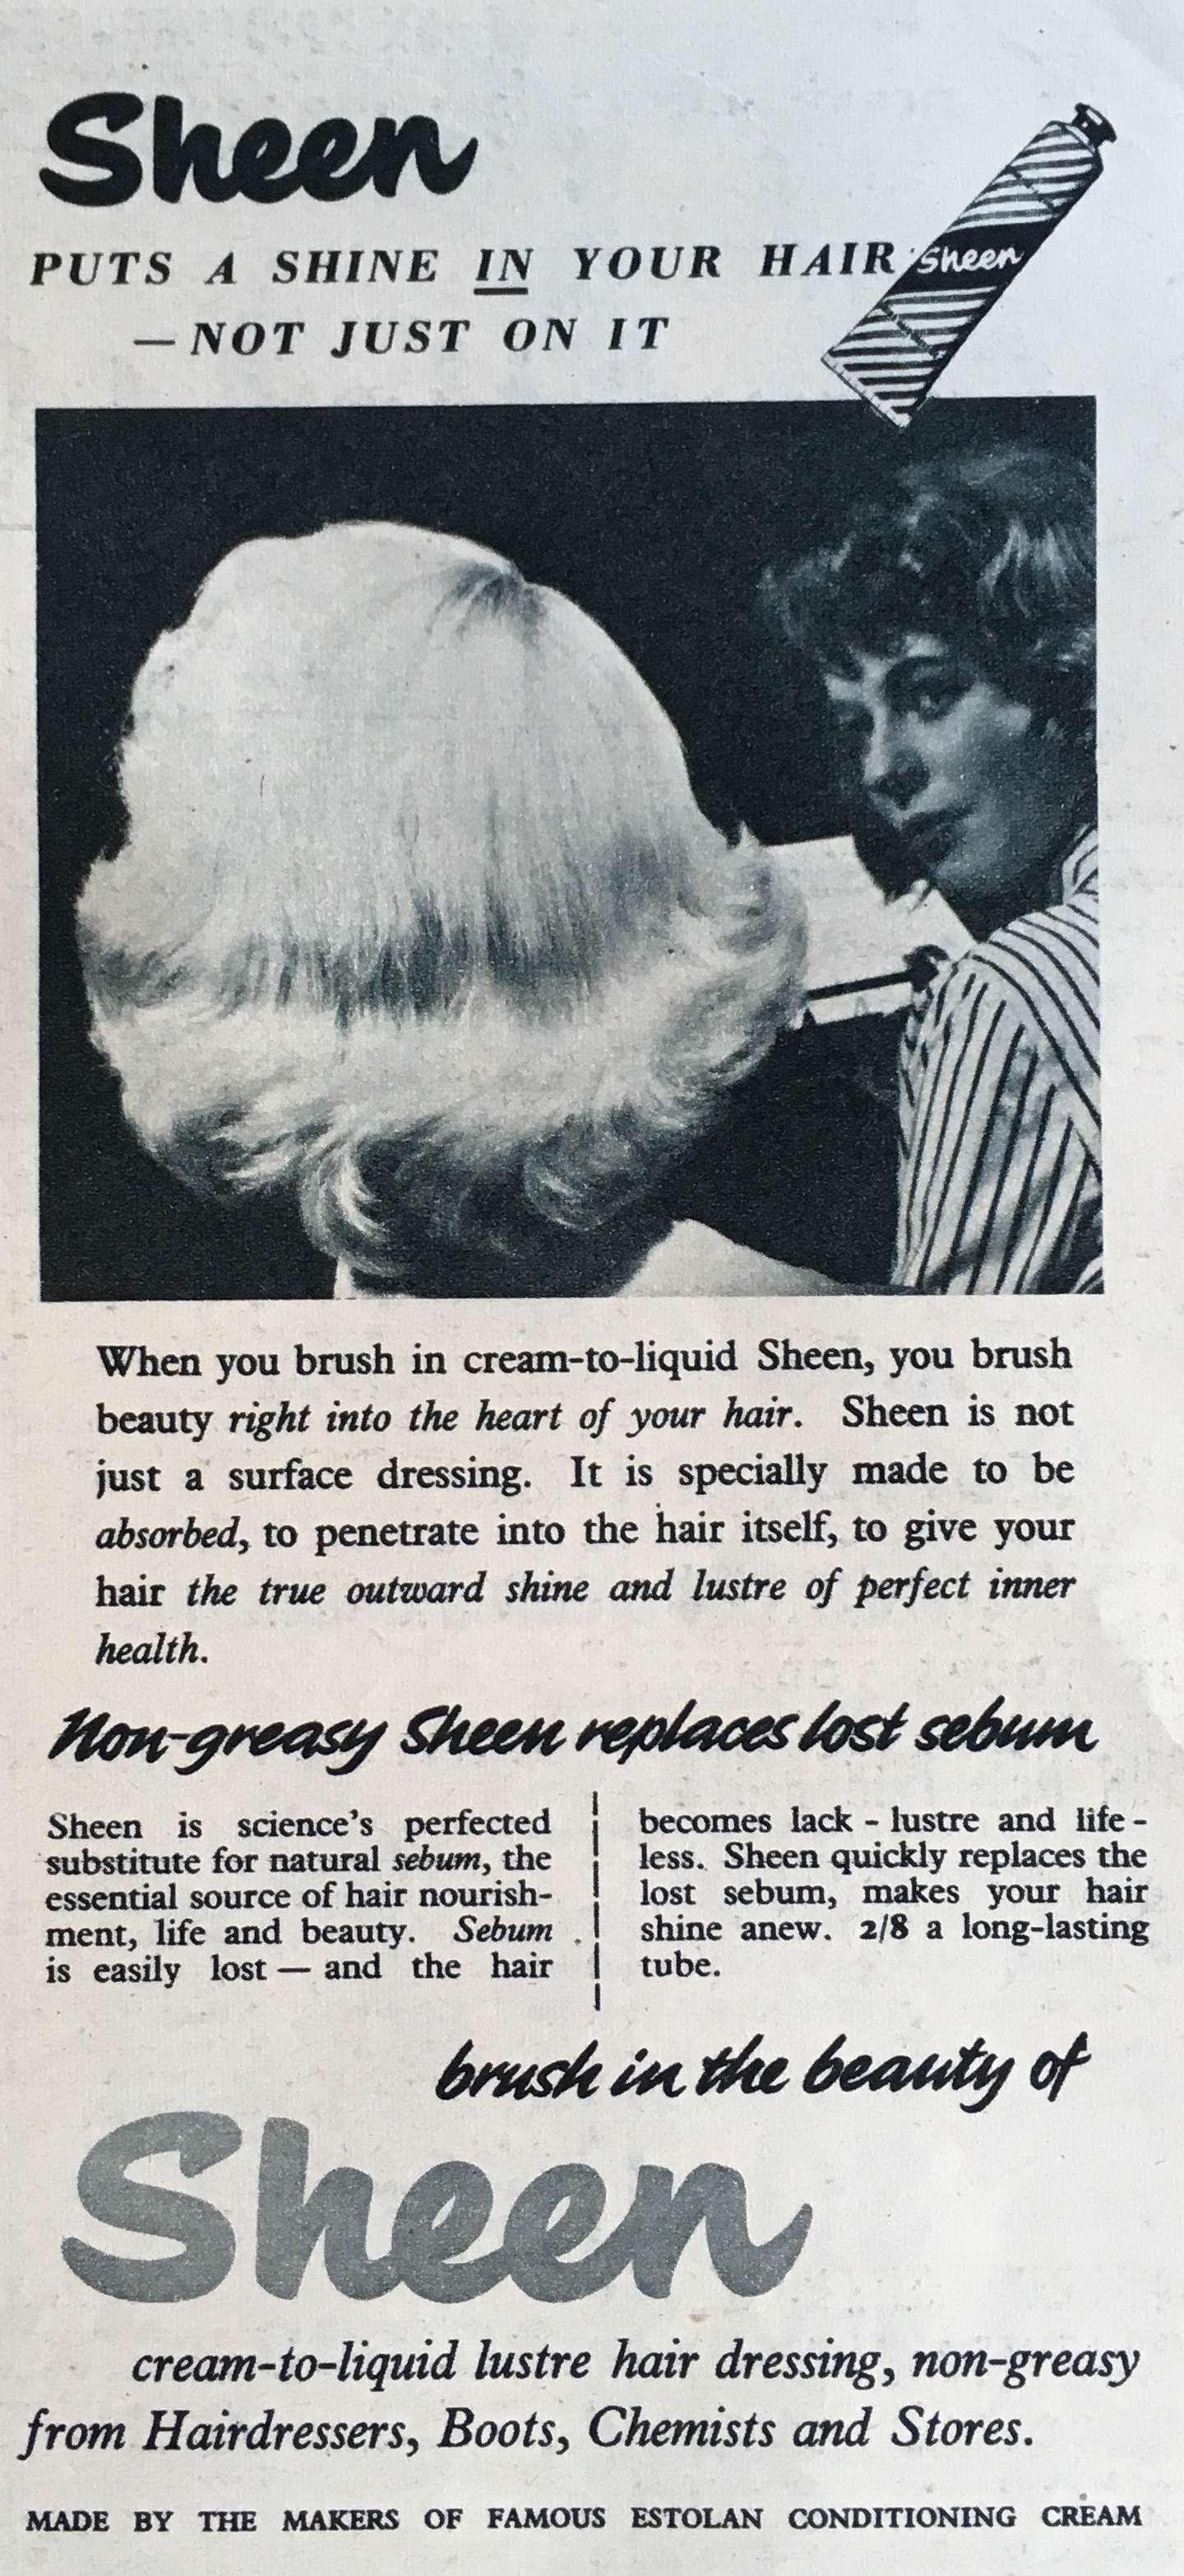 Sheen cream-to-liquid lustre hair dressing